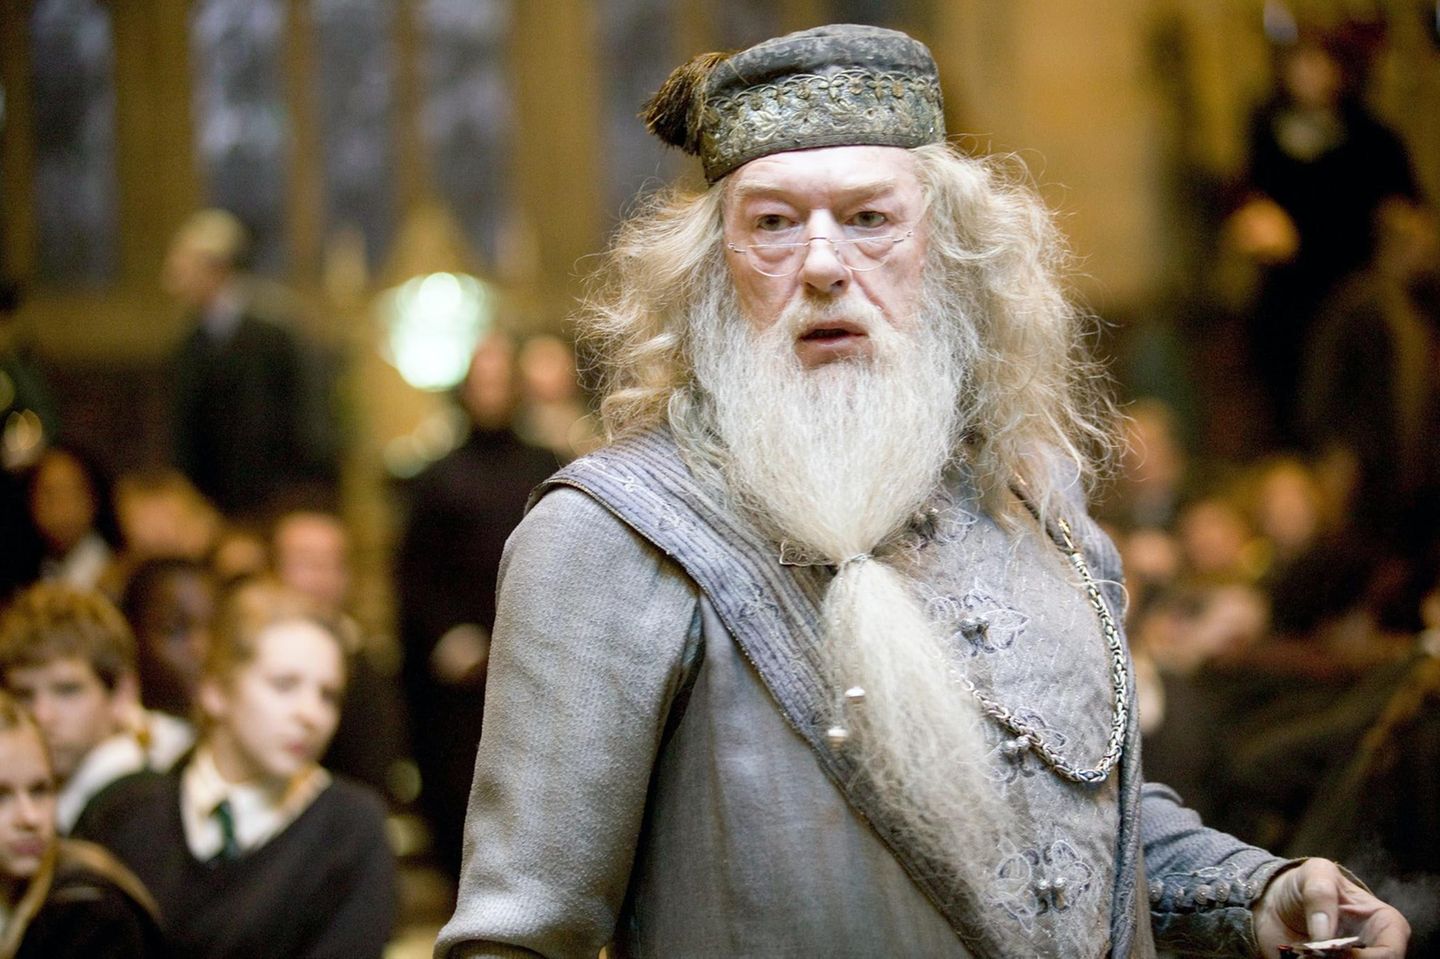 Michael Gambon als Dumbledore in der "Harry Potter"-Saga